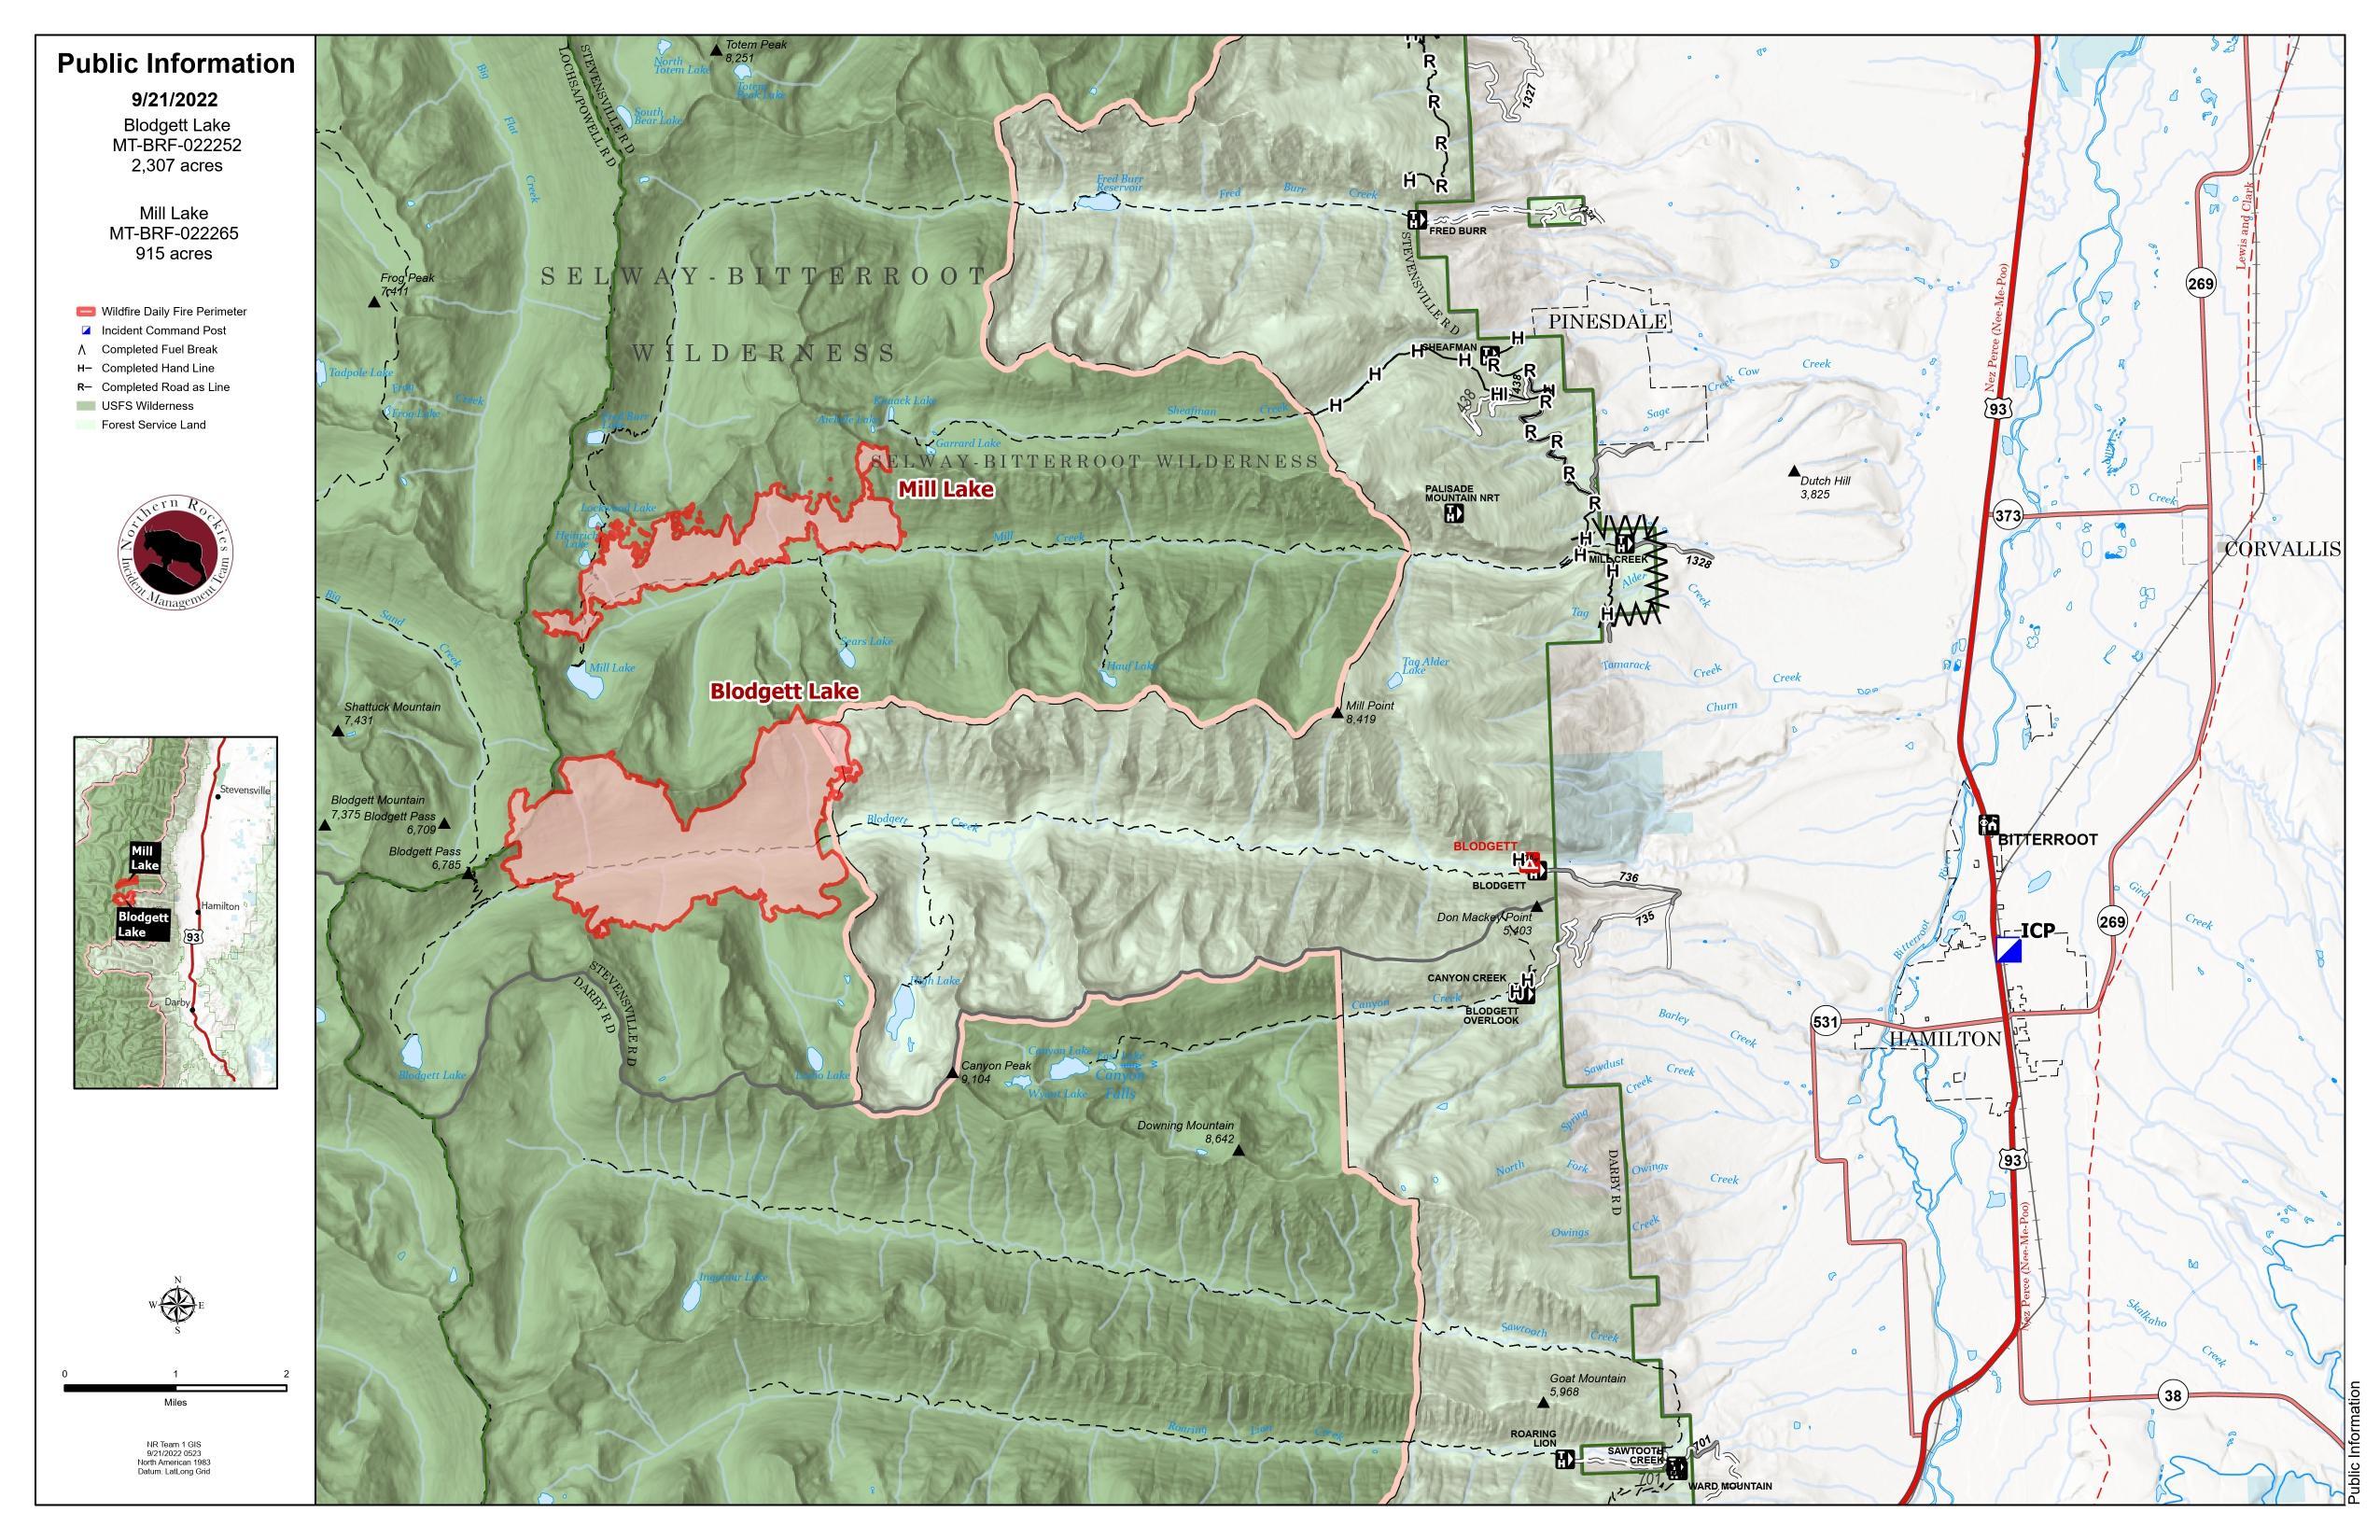 Blodgett Lake & Mill Lake Fire  Map for 9-21-2022